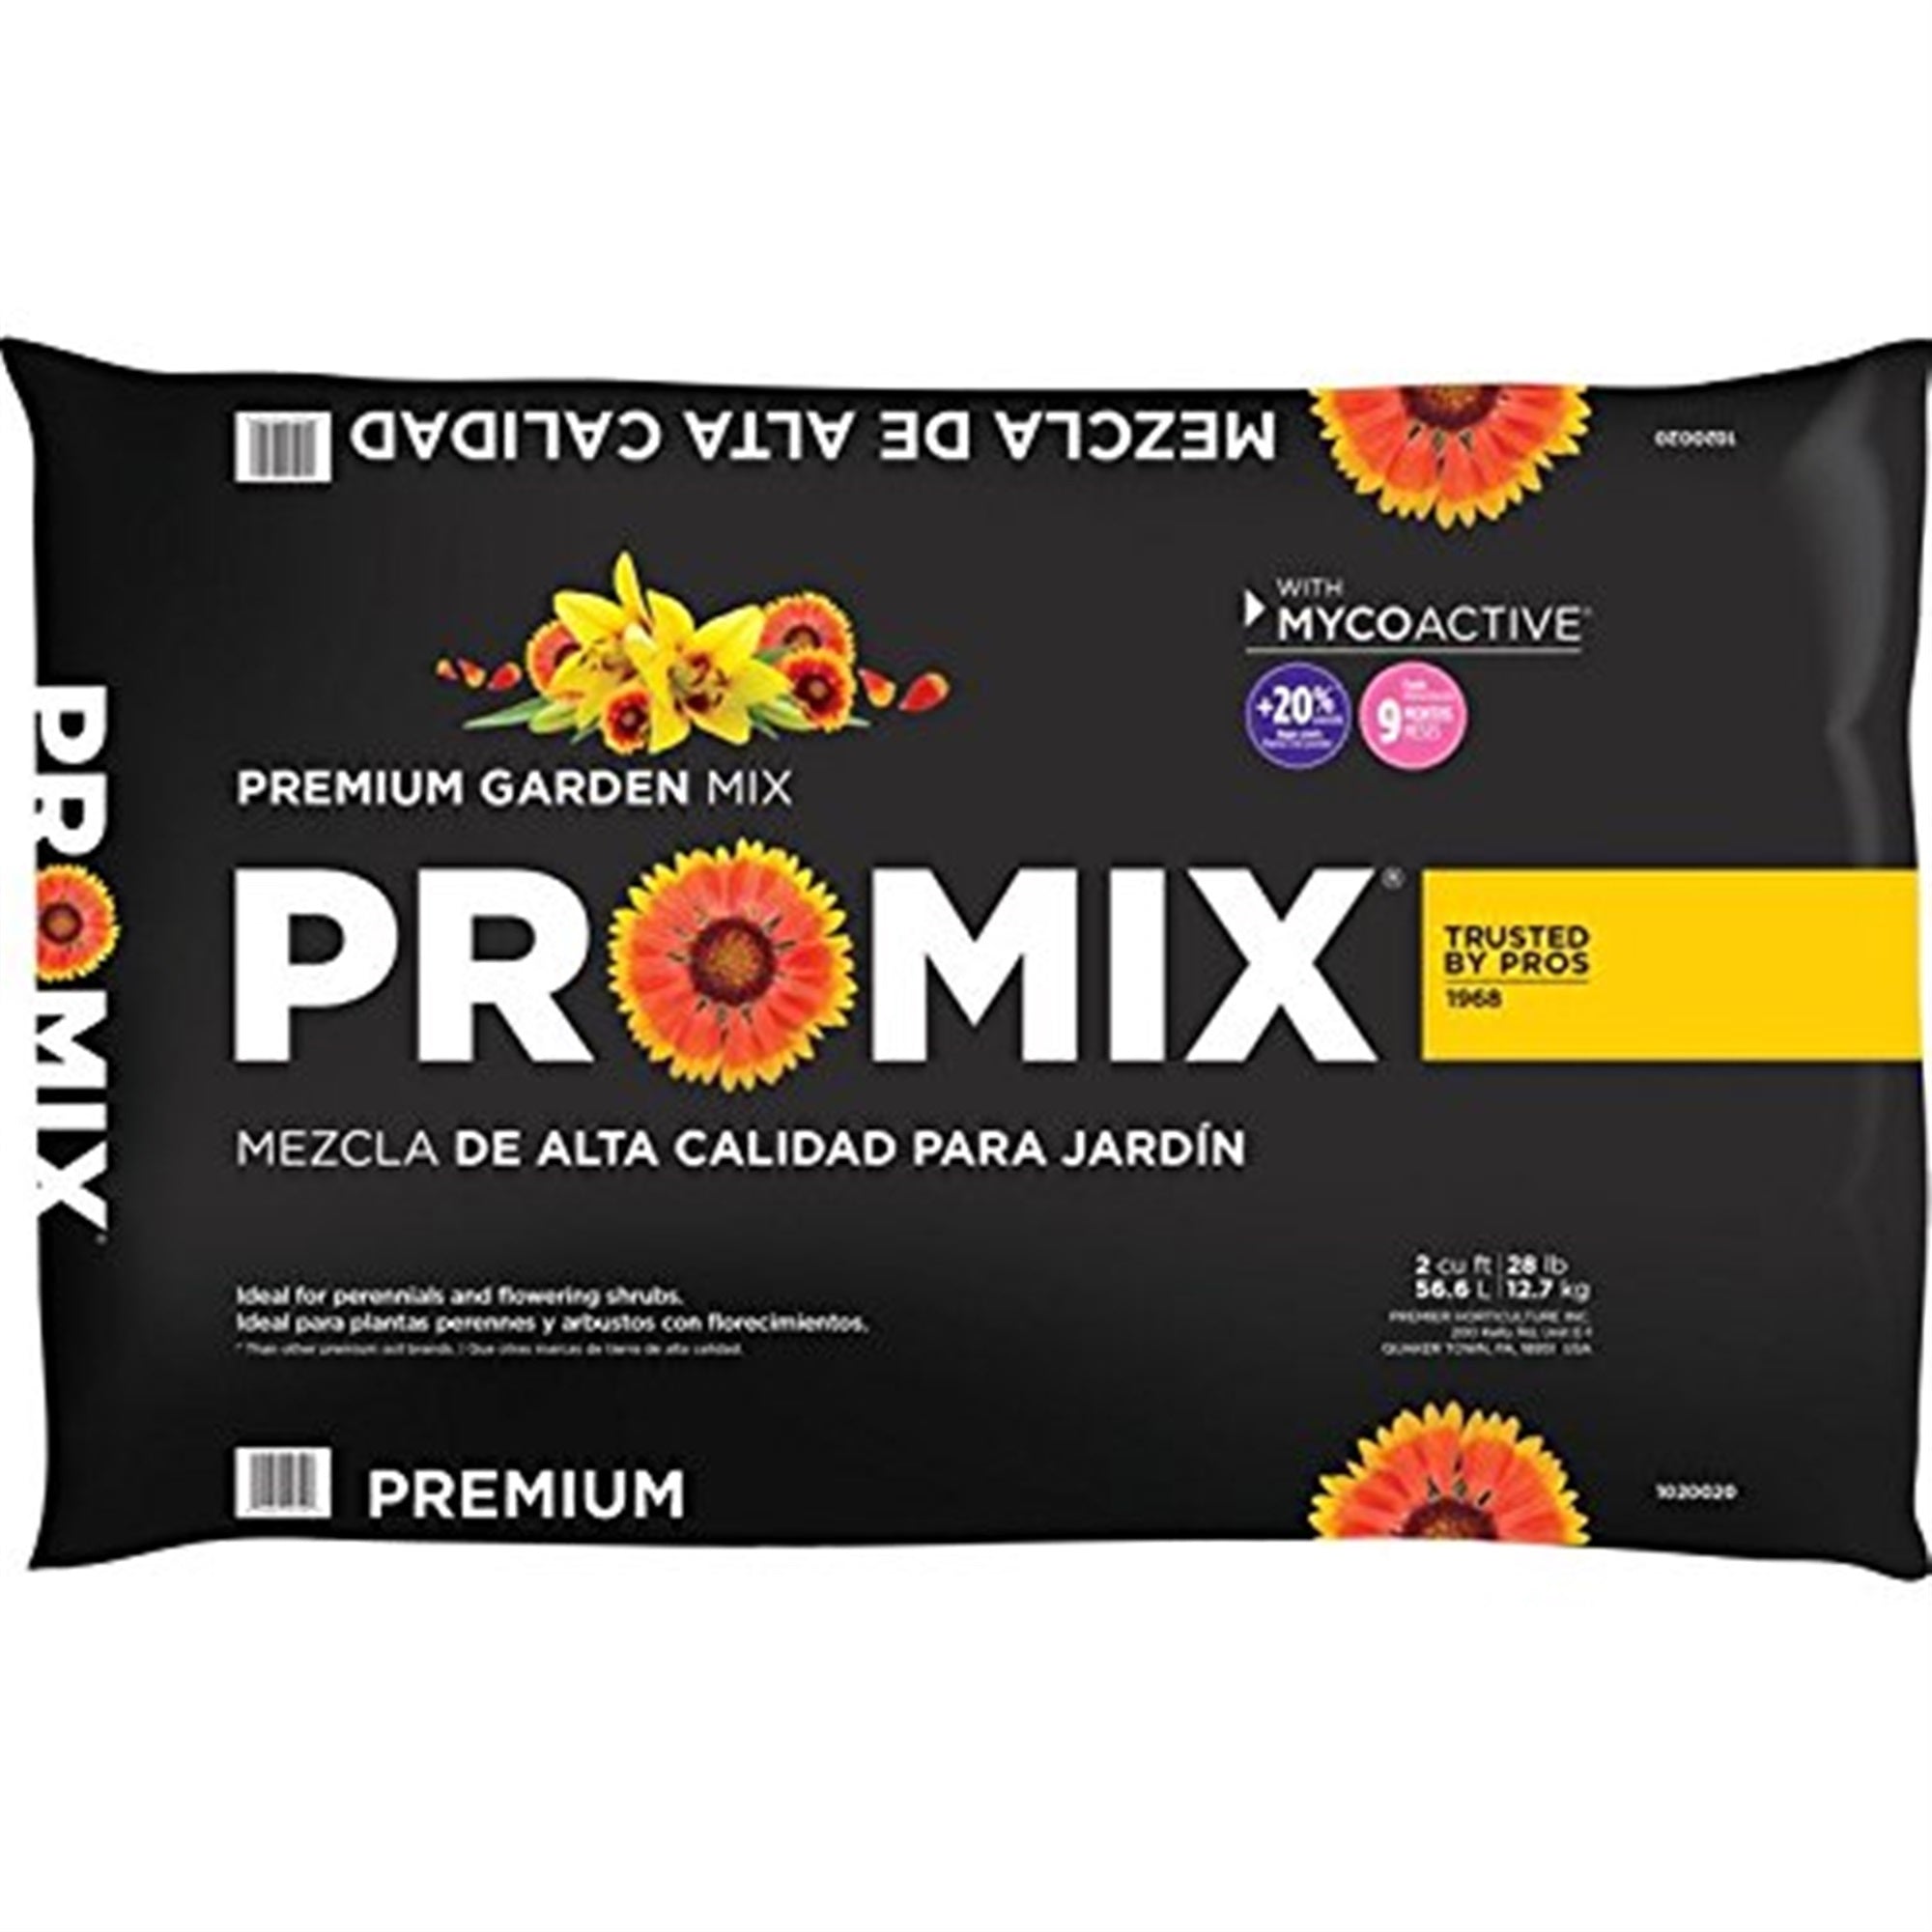 PRO-MIX Premium Garden Mix Loose Fill Fertilizer with MYCOACTIVE